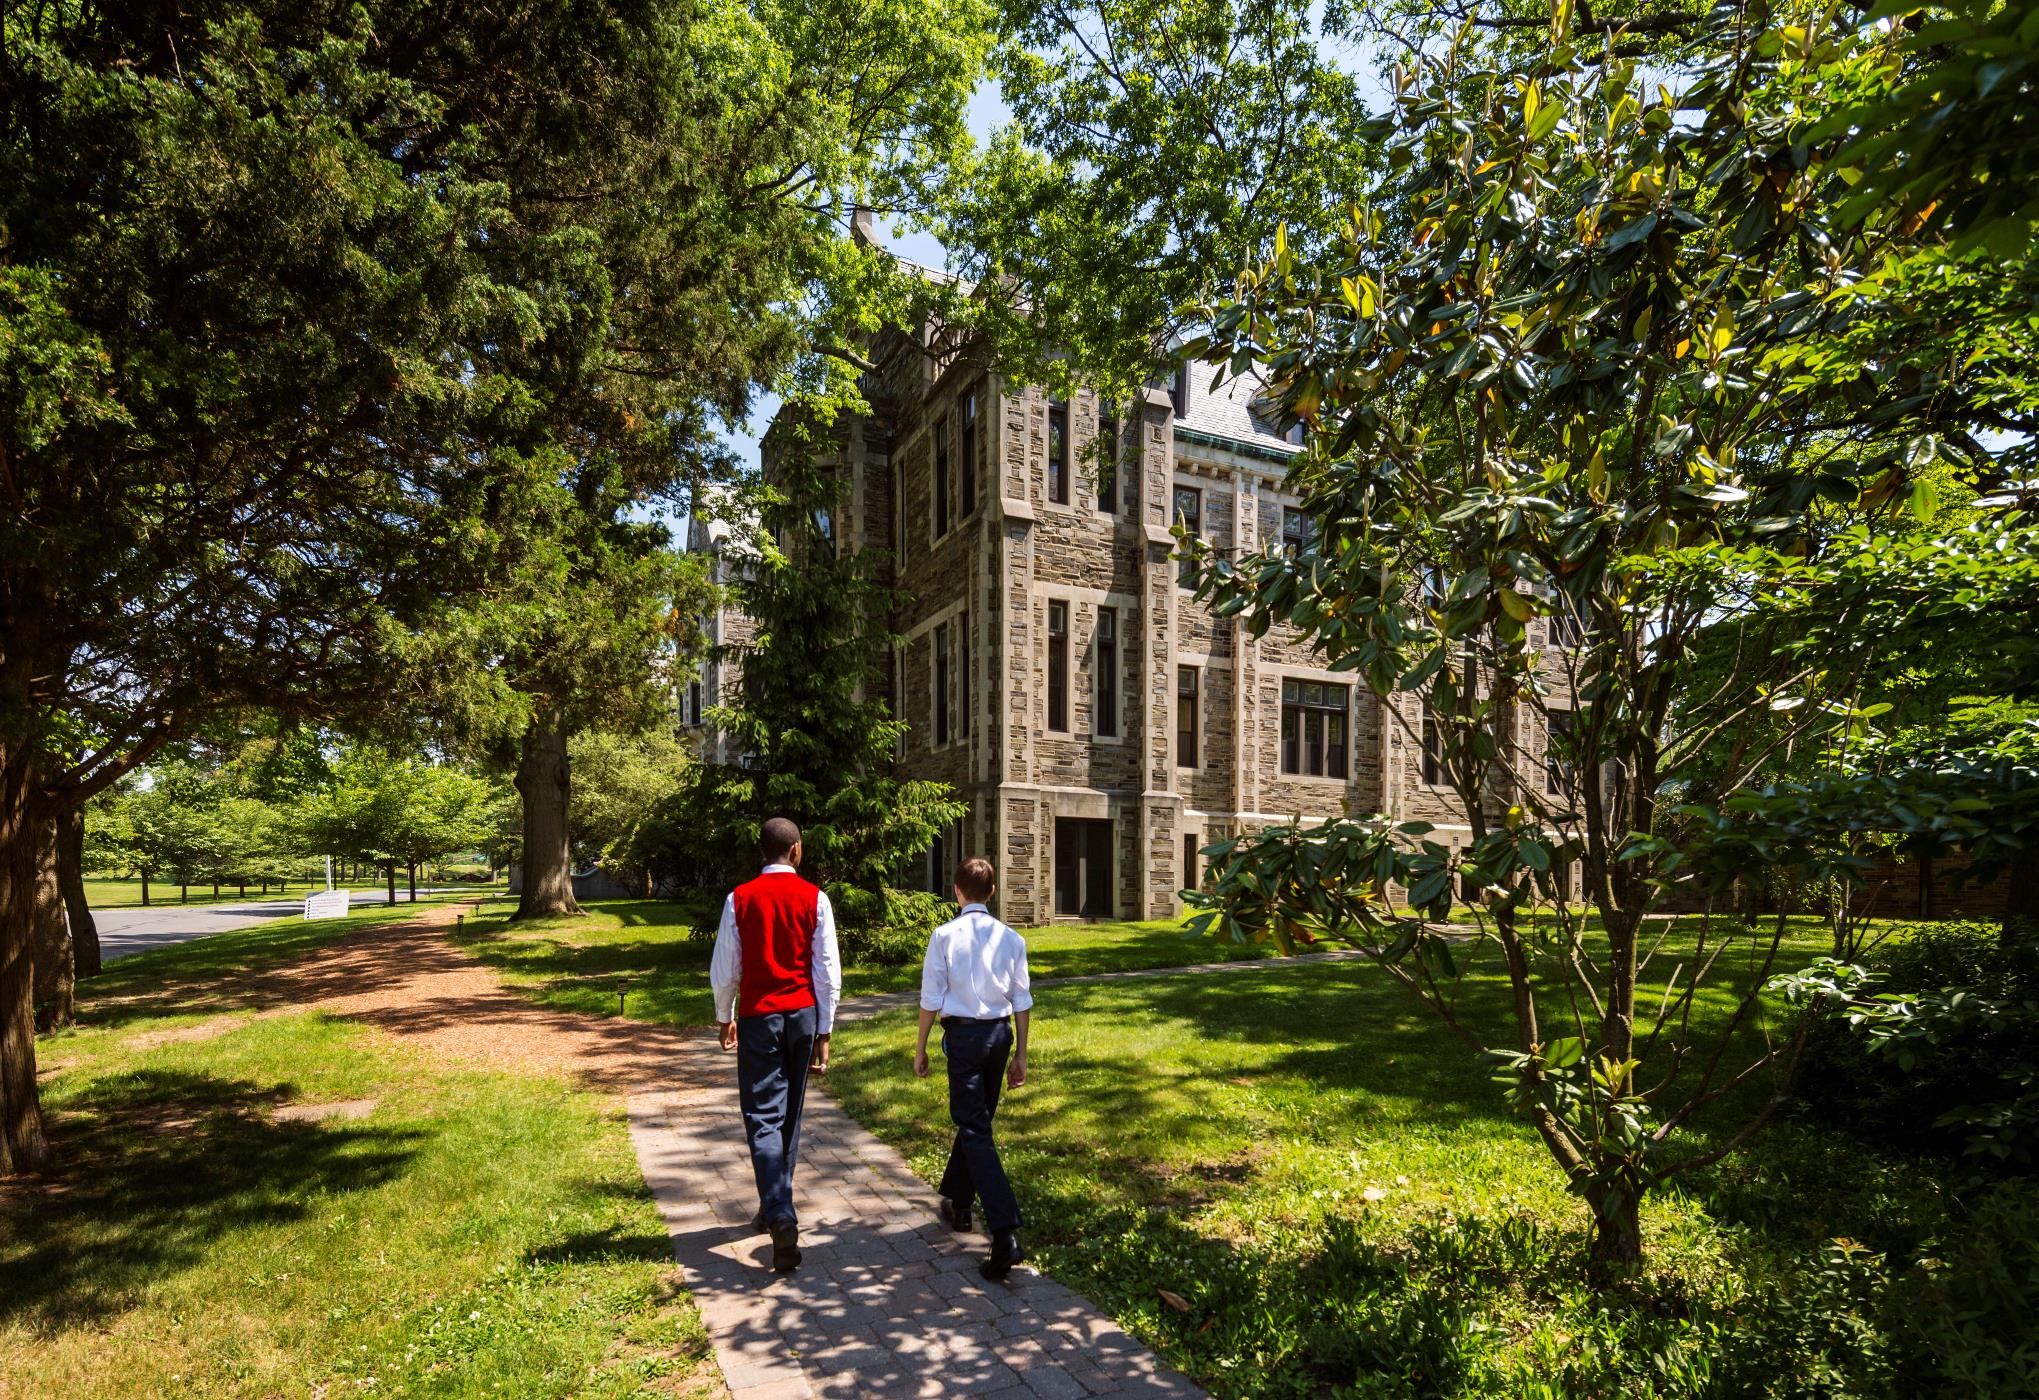 Two boys walking down a garden path towards a historic building